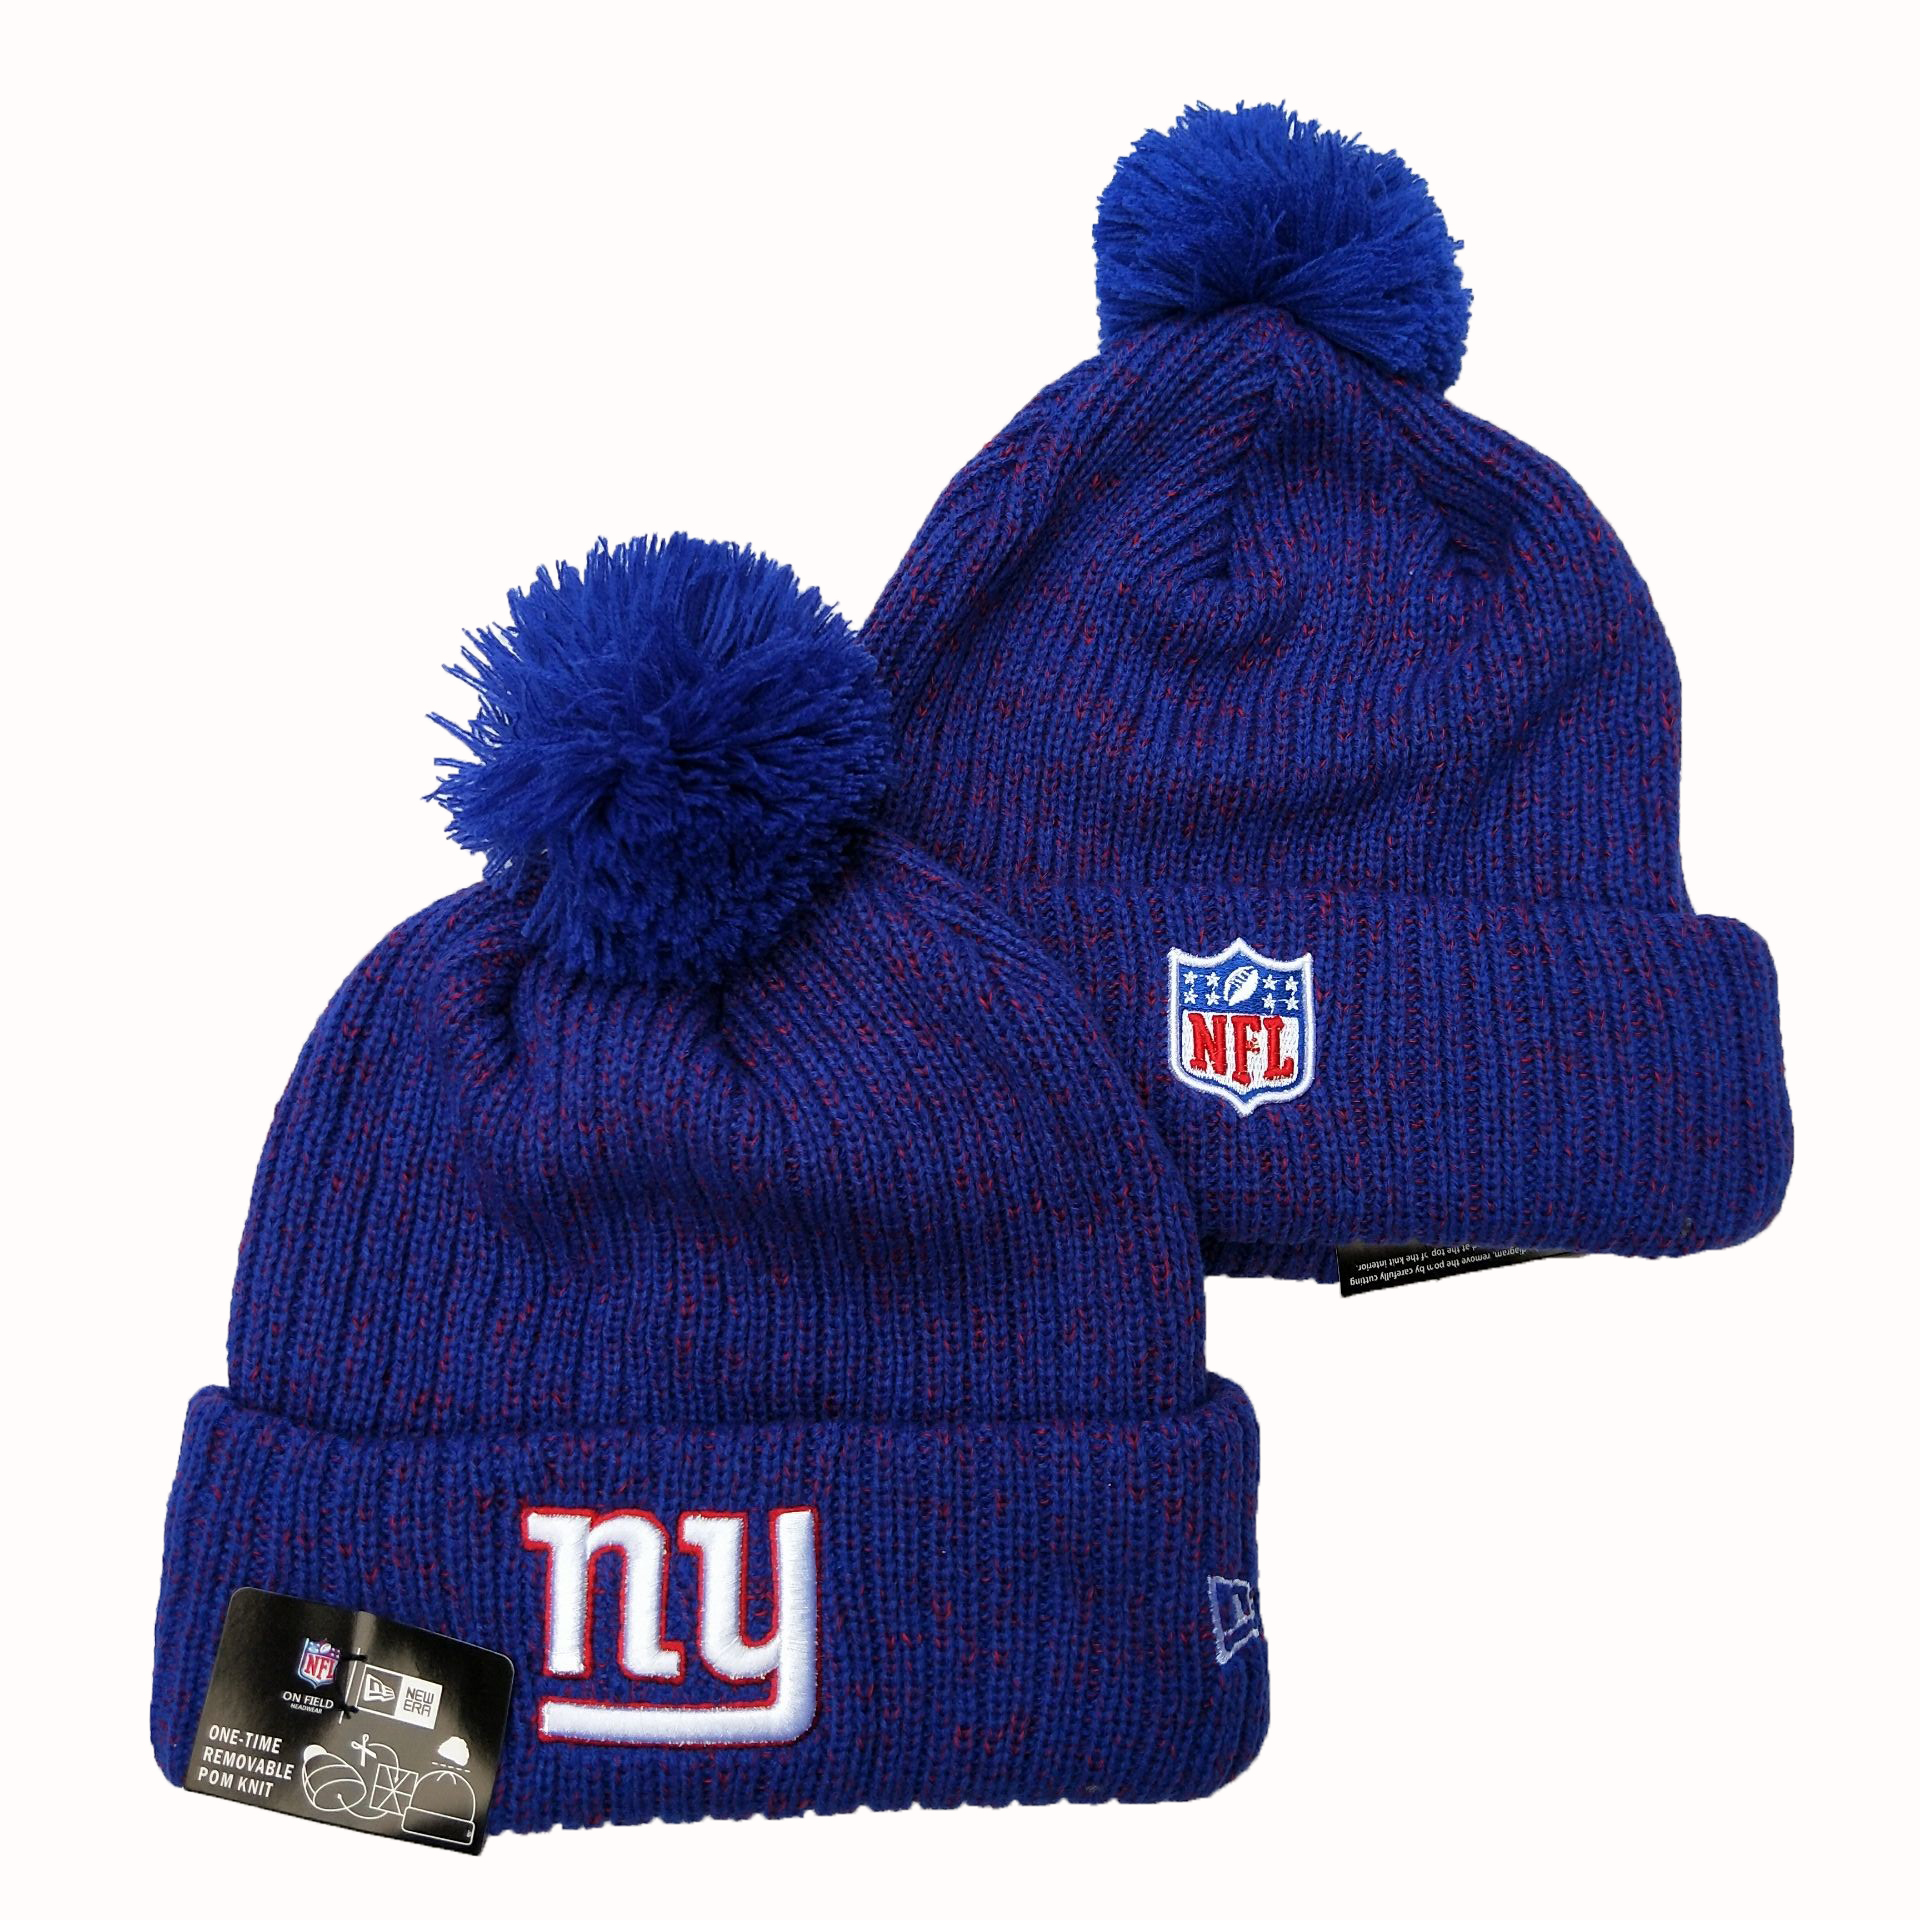 NFL New York Giants New Era 2019 Knit Hats 049